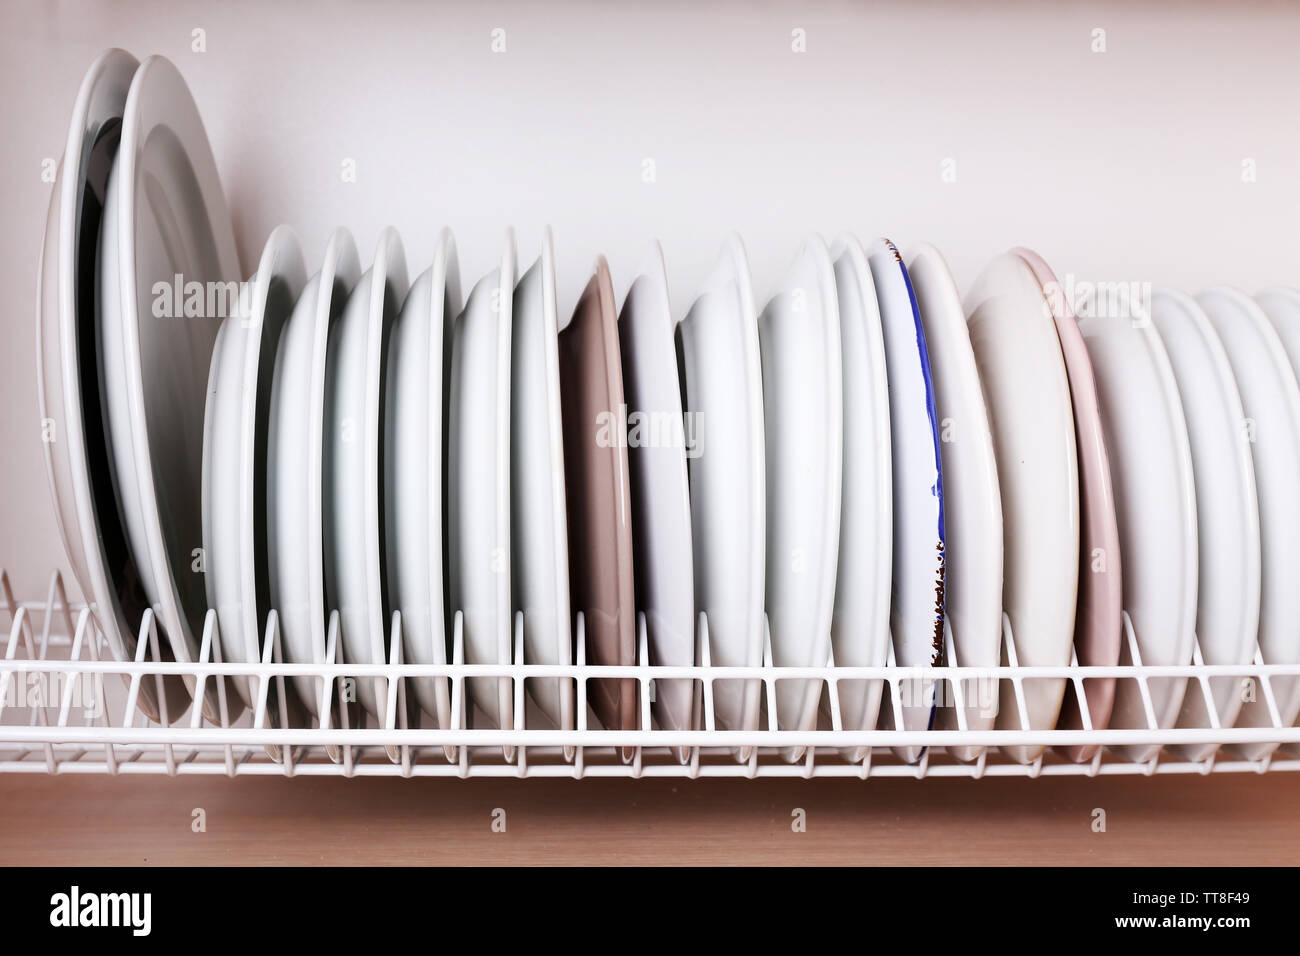 https://c8.alamy.com/comp/TT8F49/clean-plates-drying-on-metal-dish-rack-on-shelf-TT8F49.jpg